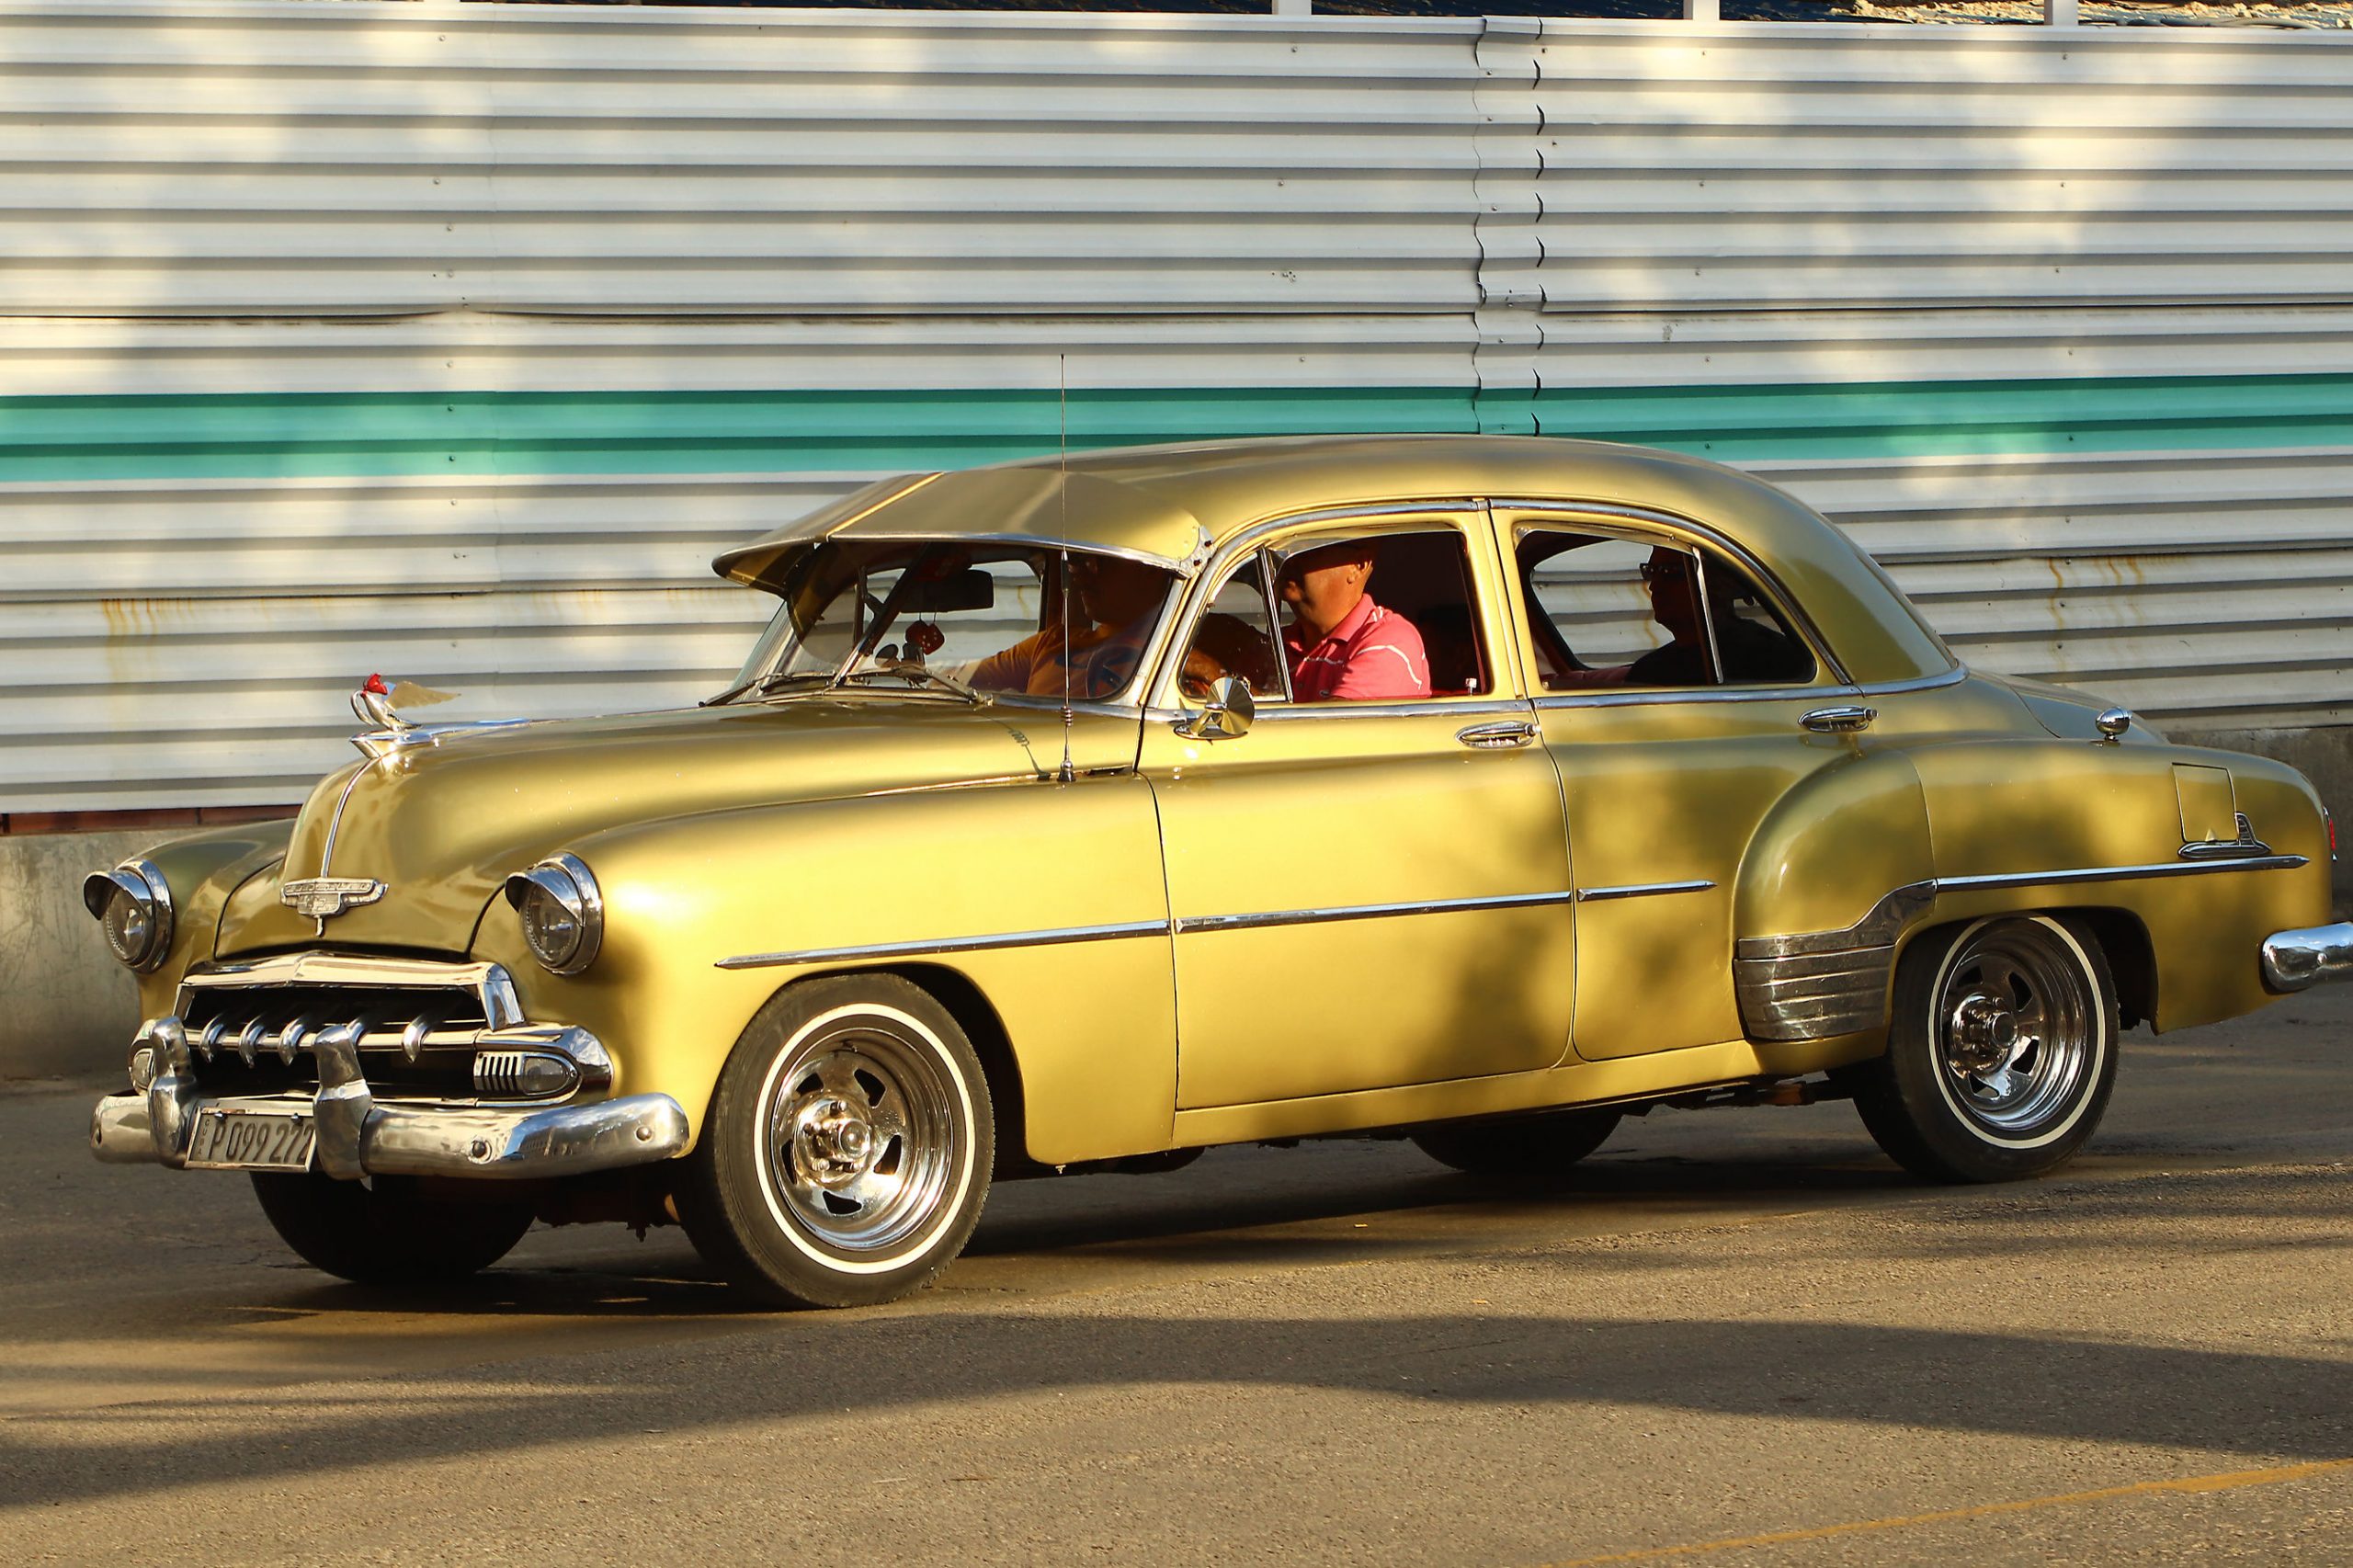 Golden Vehicle on the streets of Havana, Cuba